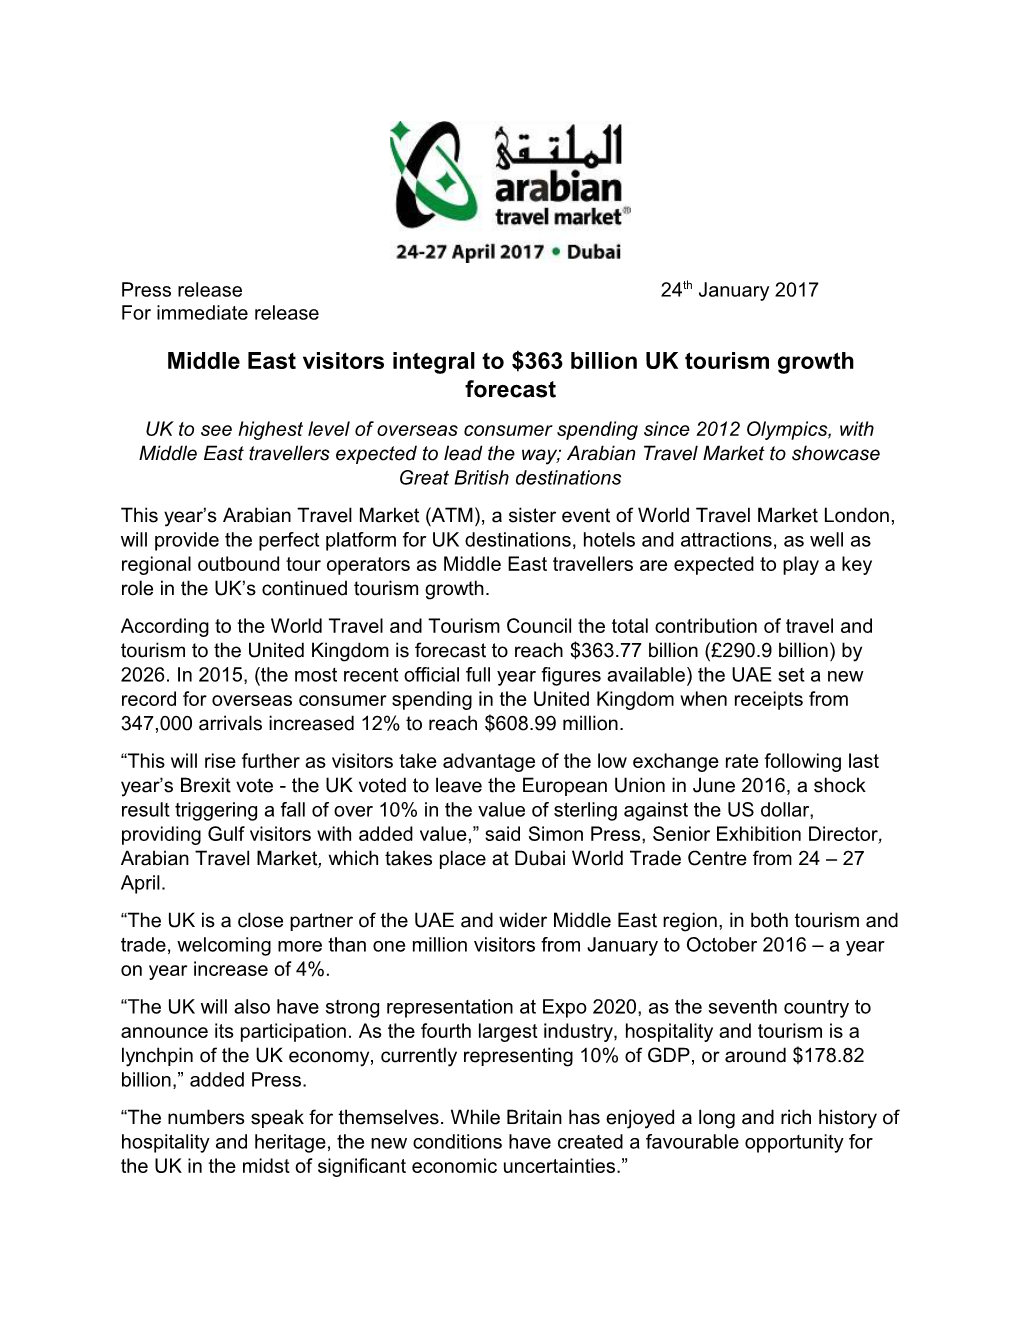 Middle East Visitors Integral to $363 Billion UK Tourism Growth Forecast